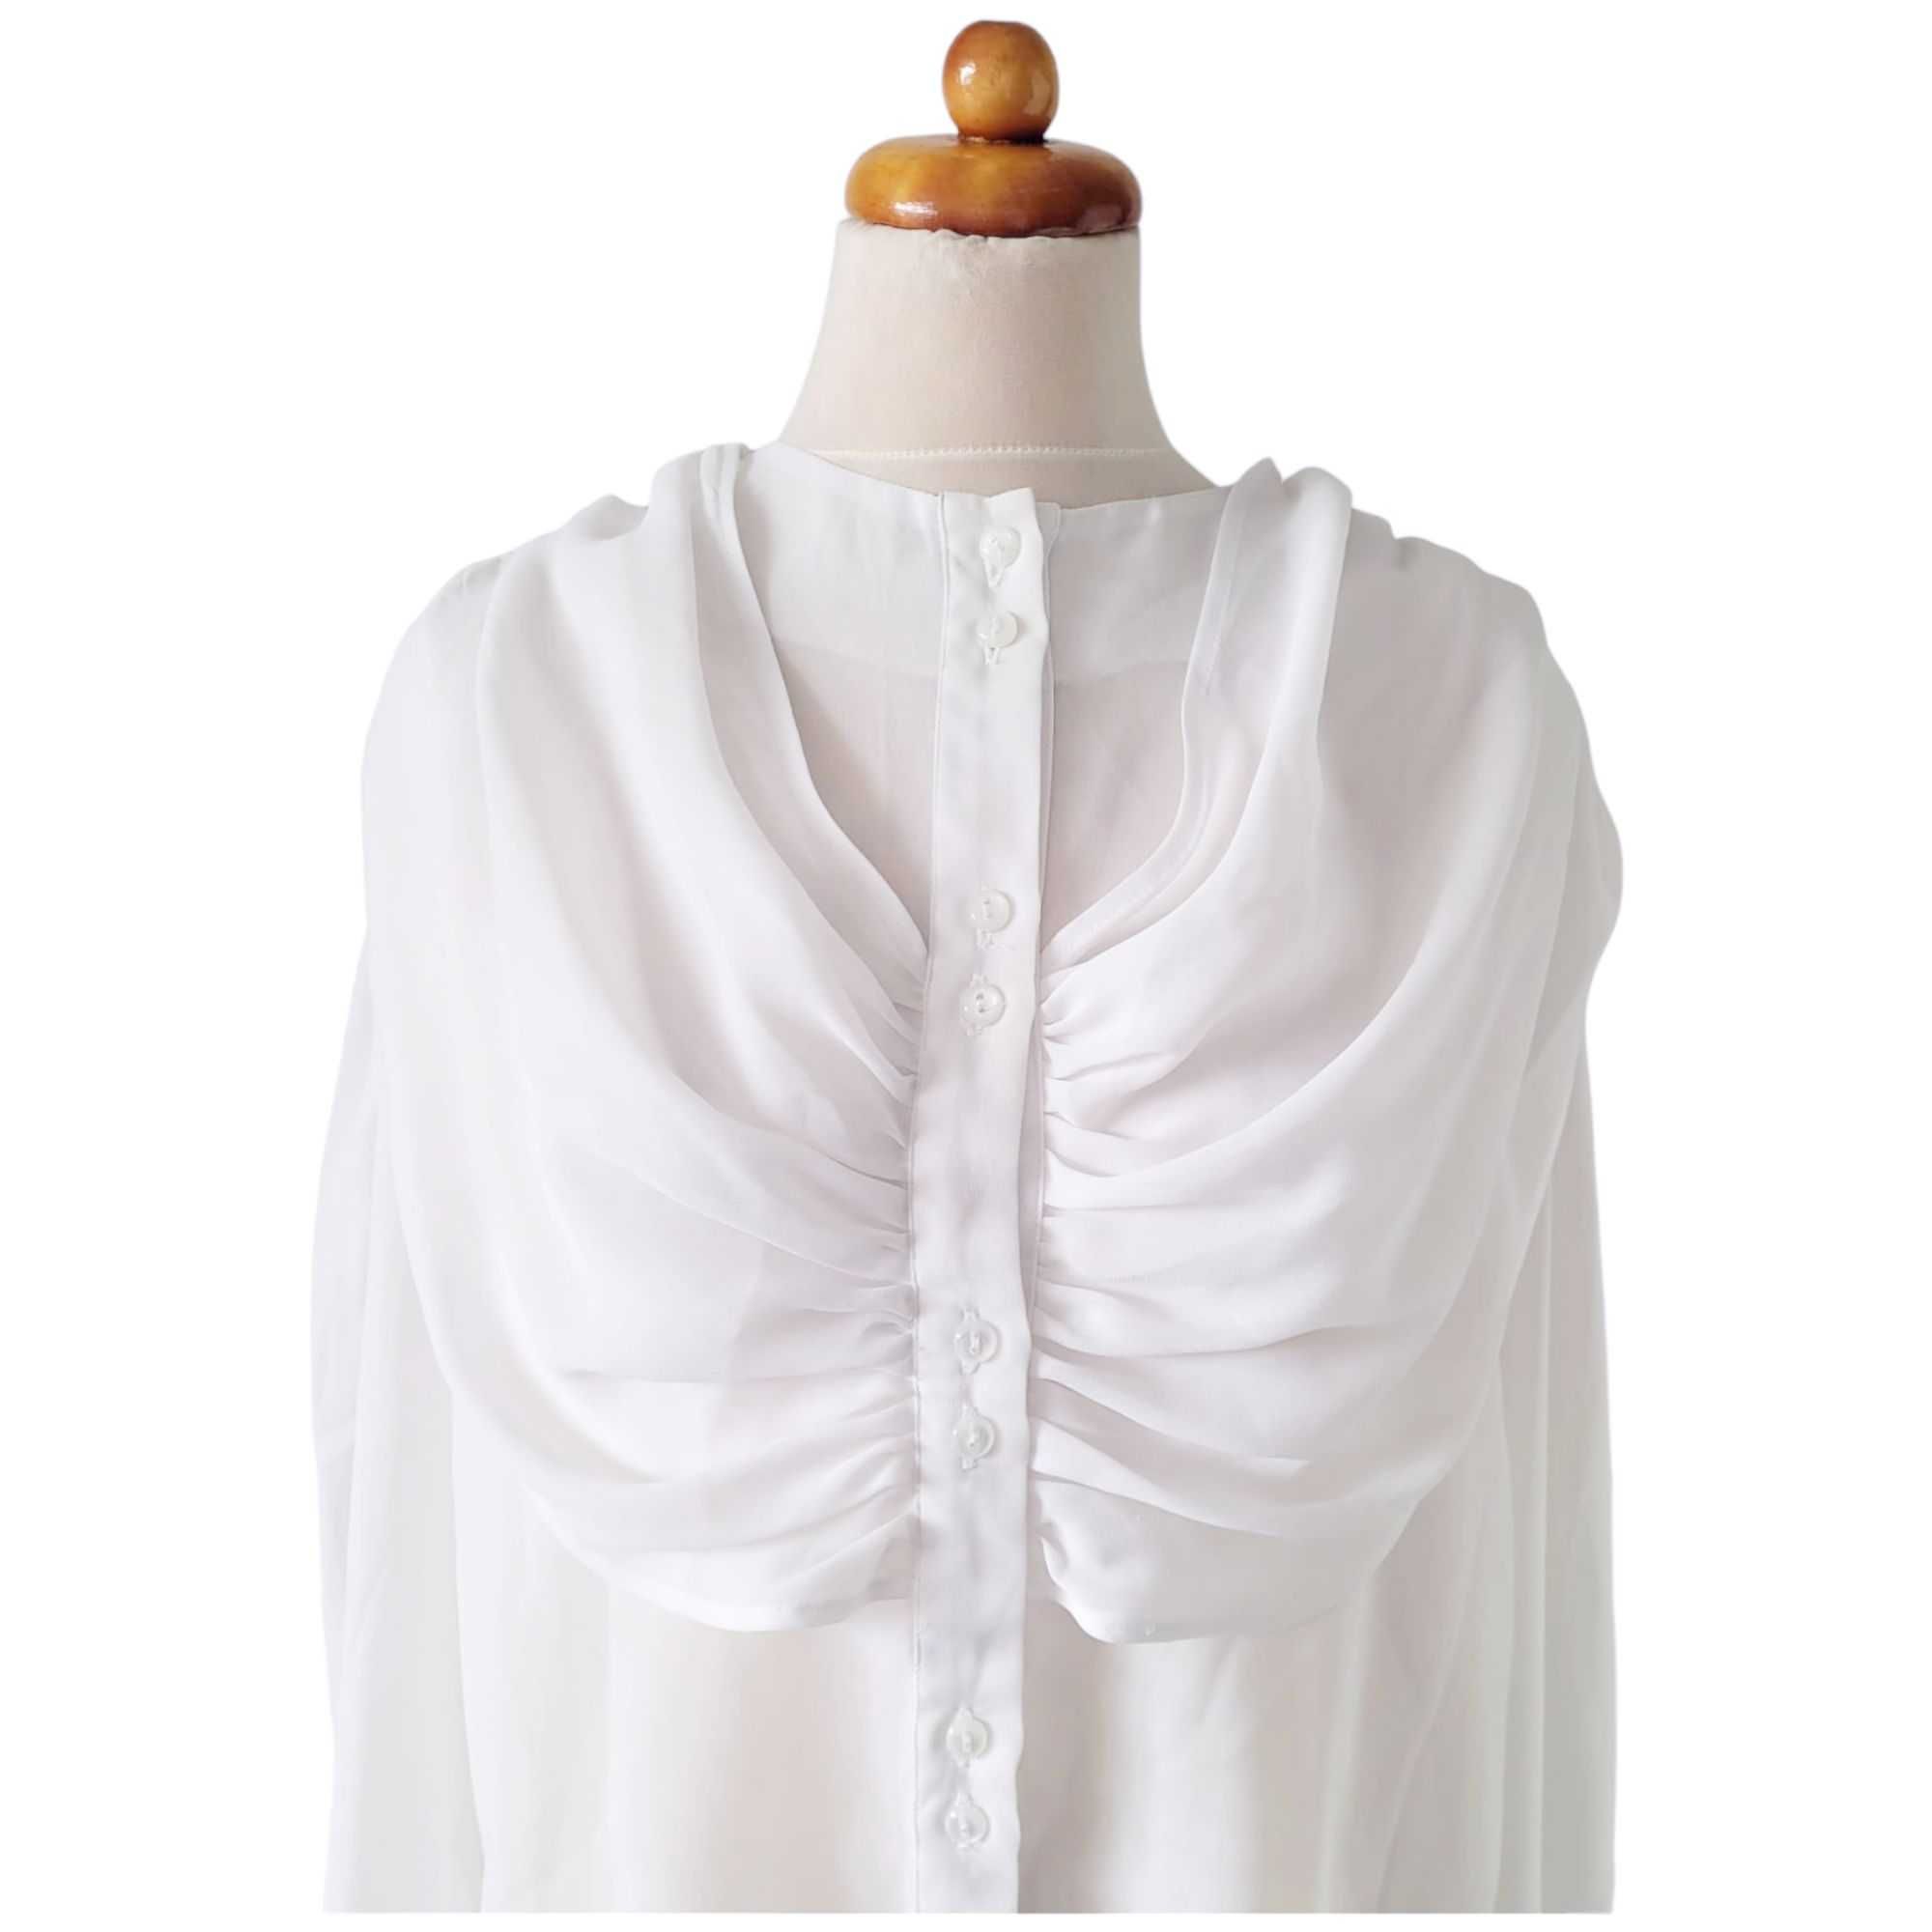 Biała koszula damska vintage szyfonowa L XL Tara lata 80. bluzka